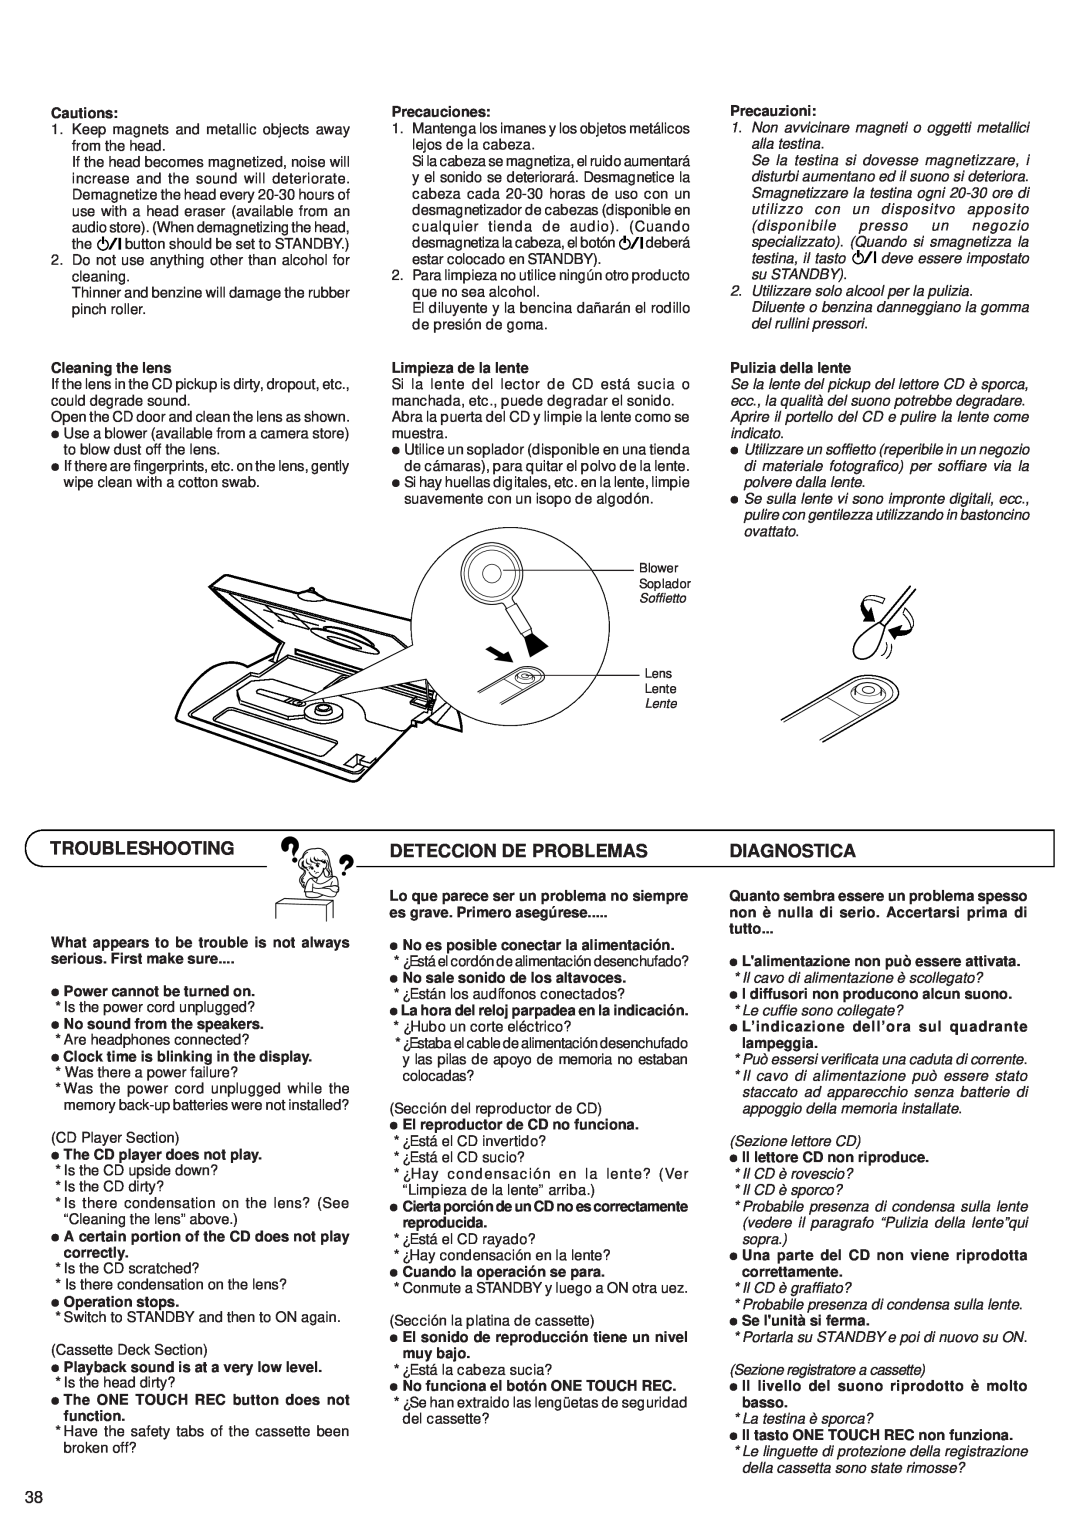 JVC RV-B55 GY/BU/LTD manual Troubleshooting, Deteccion De Problemas, Diagnostica 